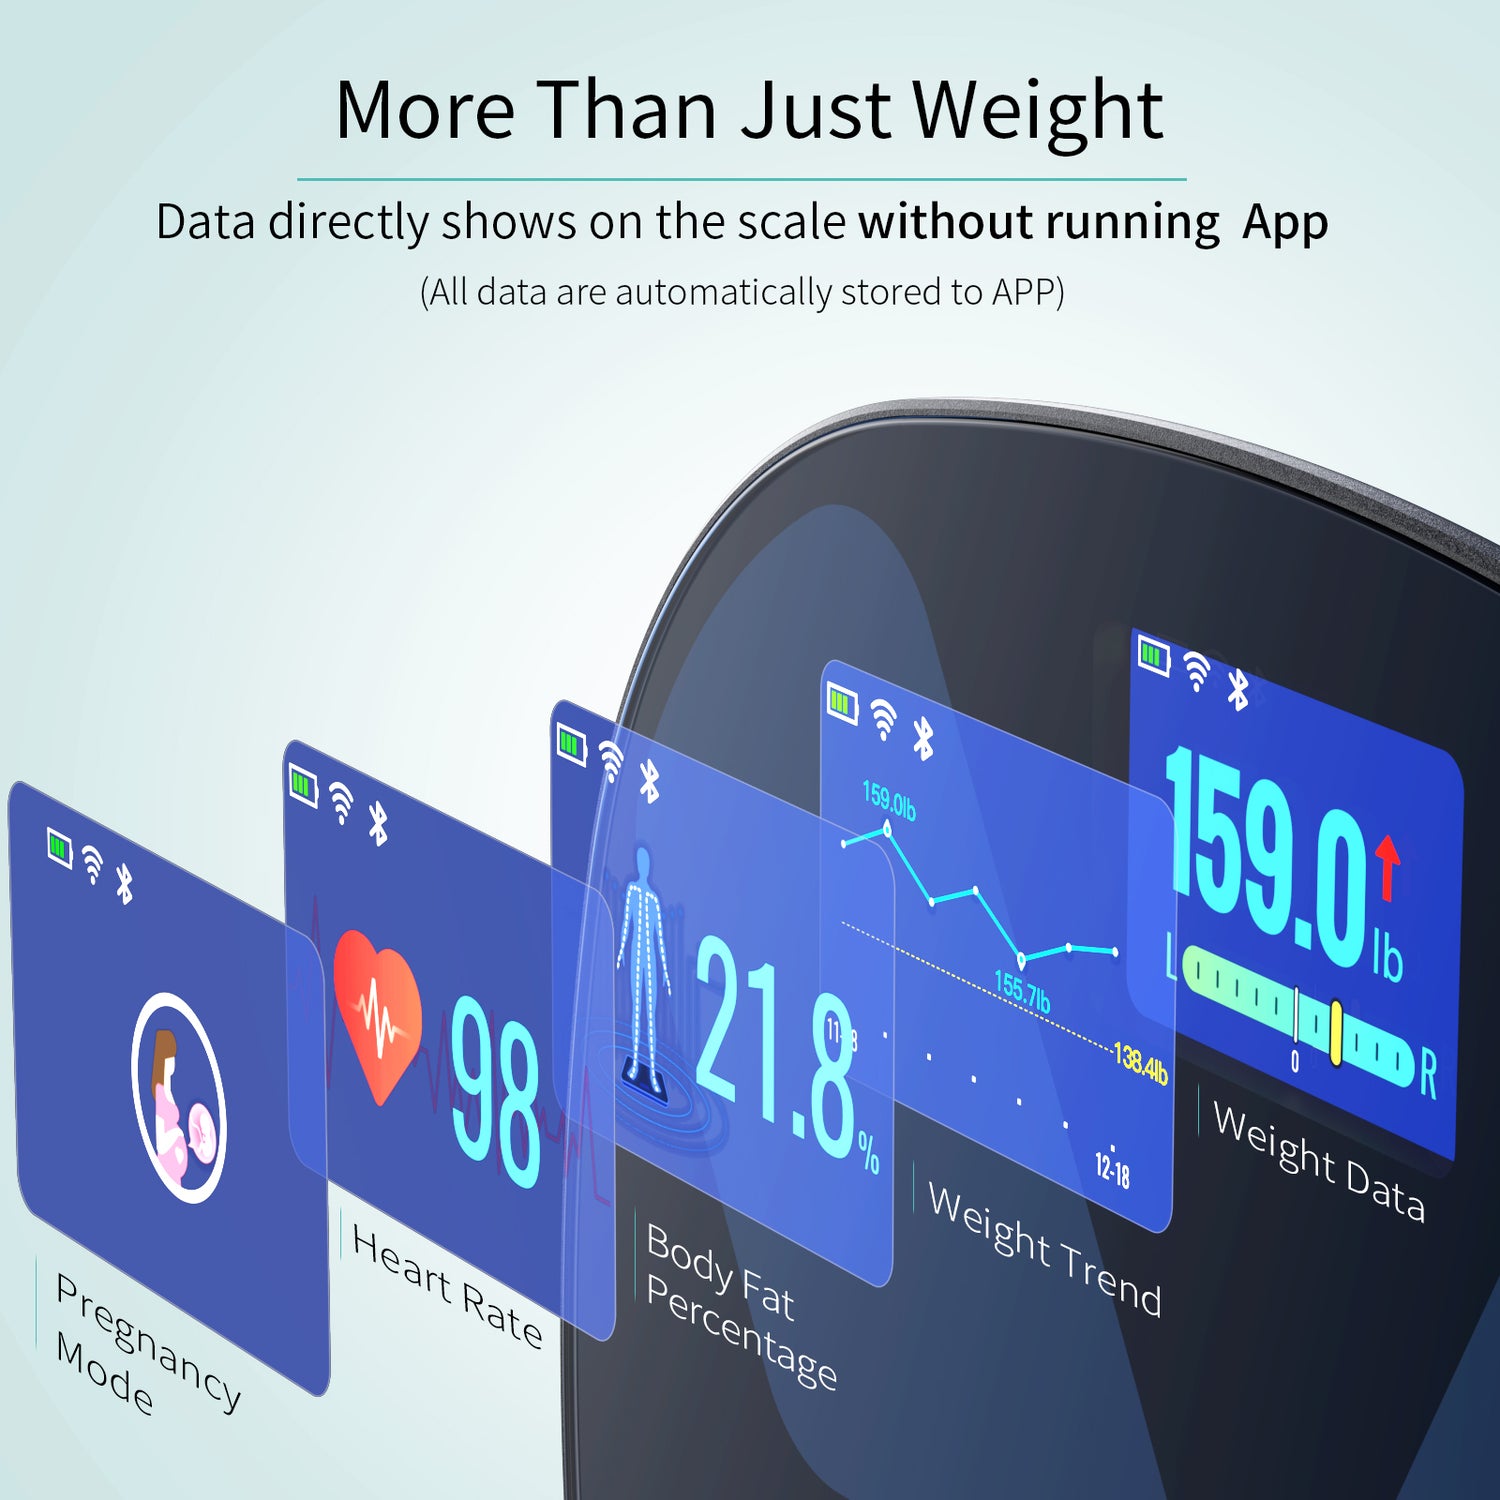 Slimpal Body Fat Tape Measure, Bluetooth Digital Smart Body Tape Measu